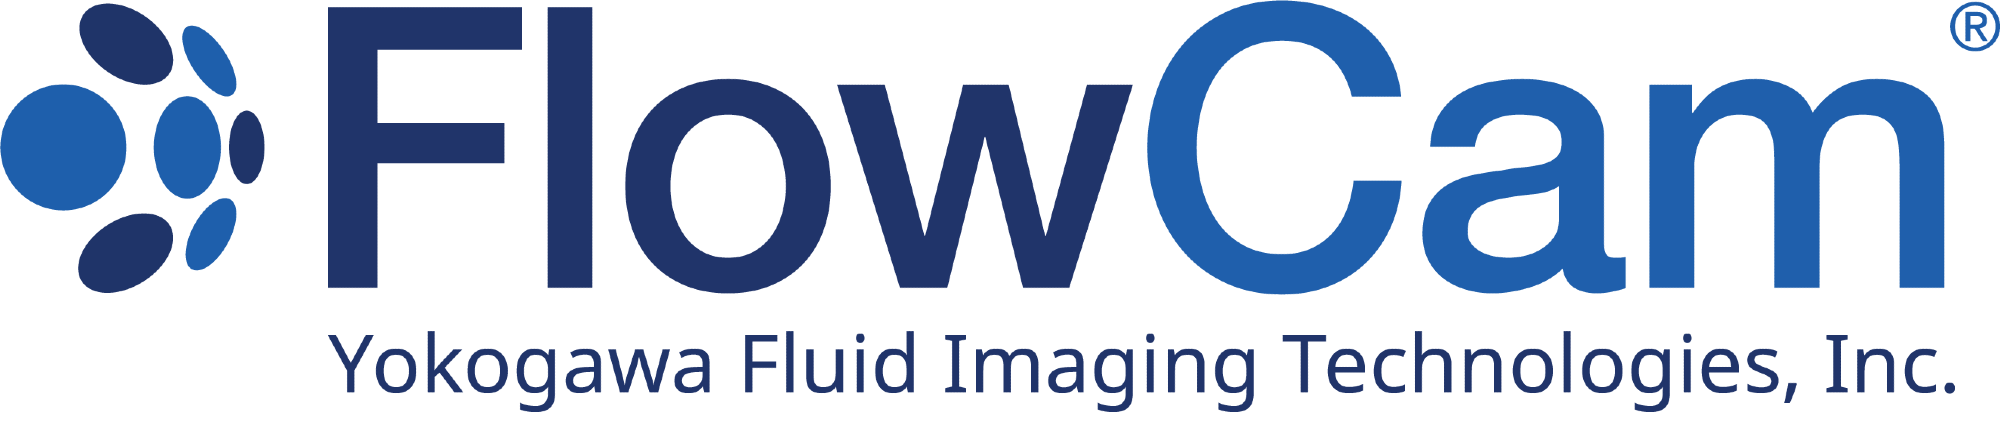 Yokogawa Fluid Imaging Technologies, Inc.